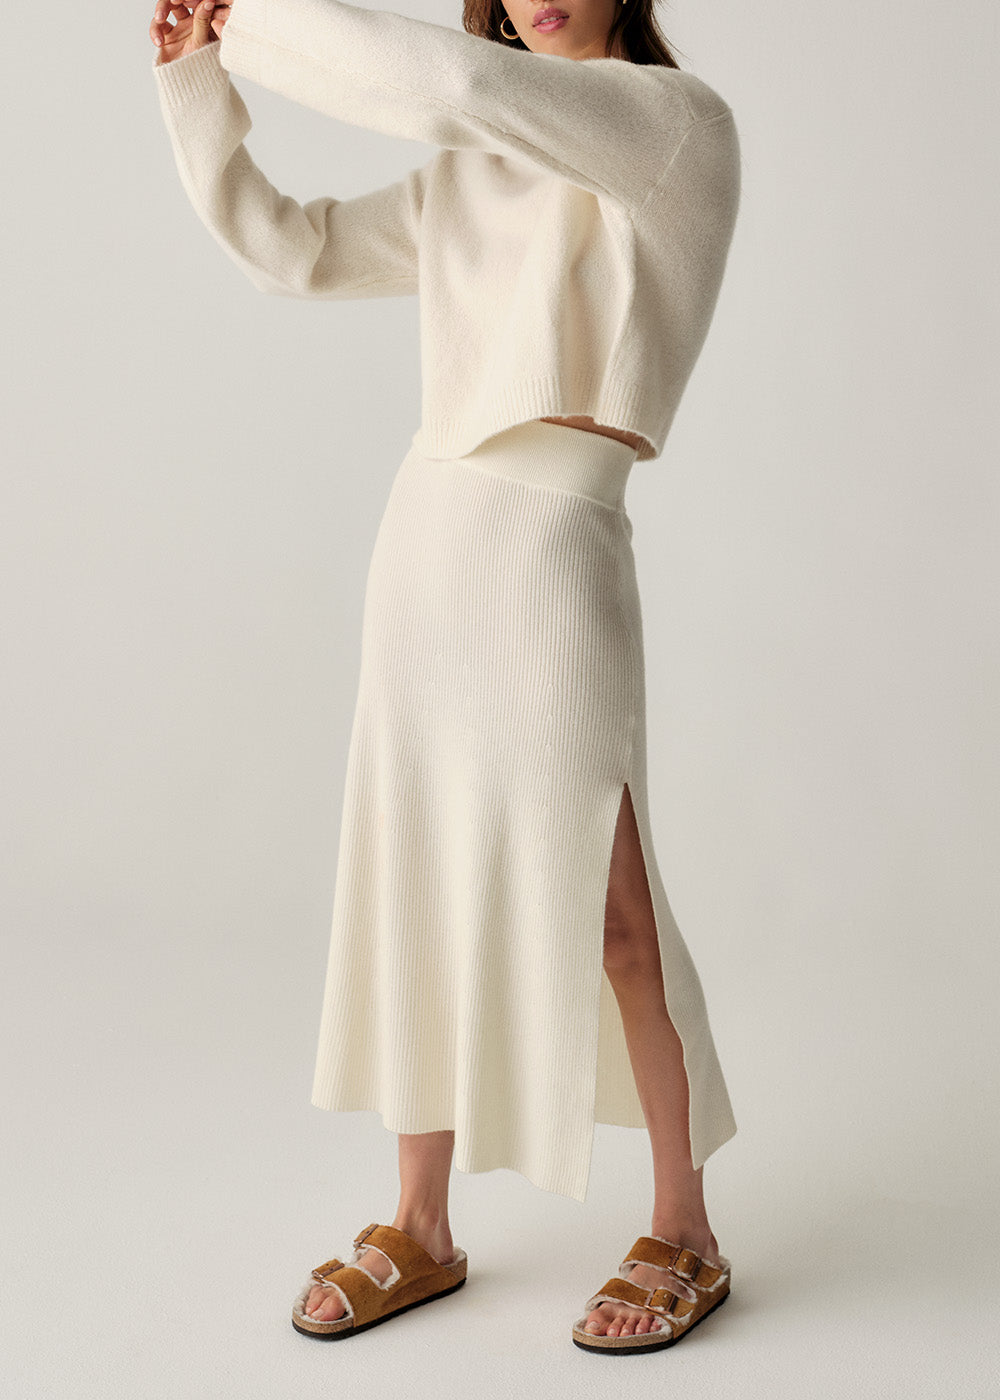 River Knit Skirt - Medium / Ivory